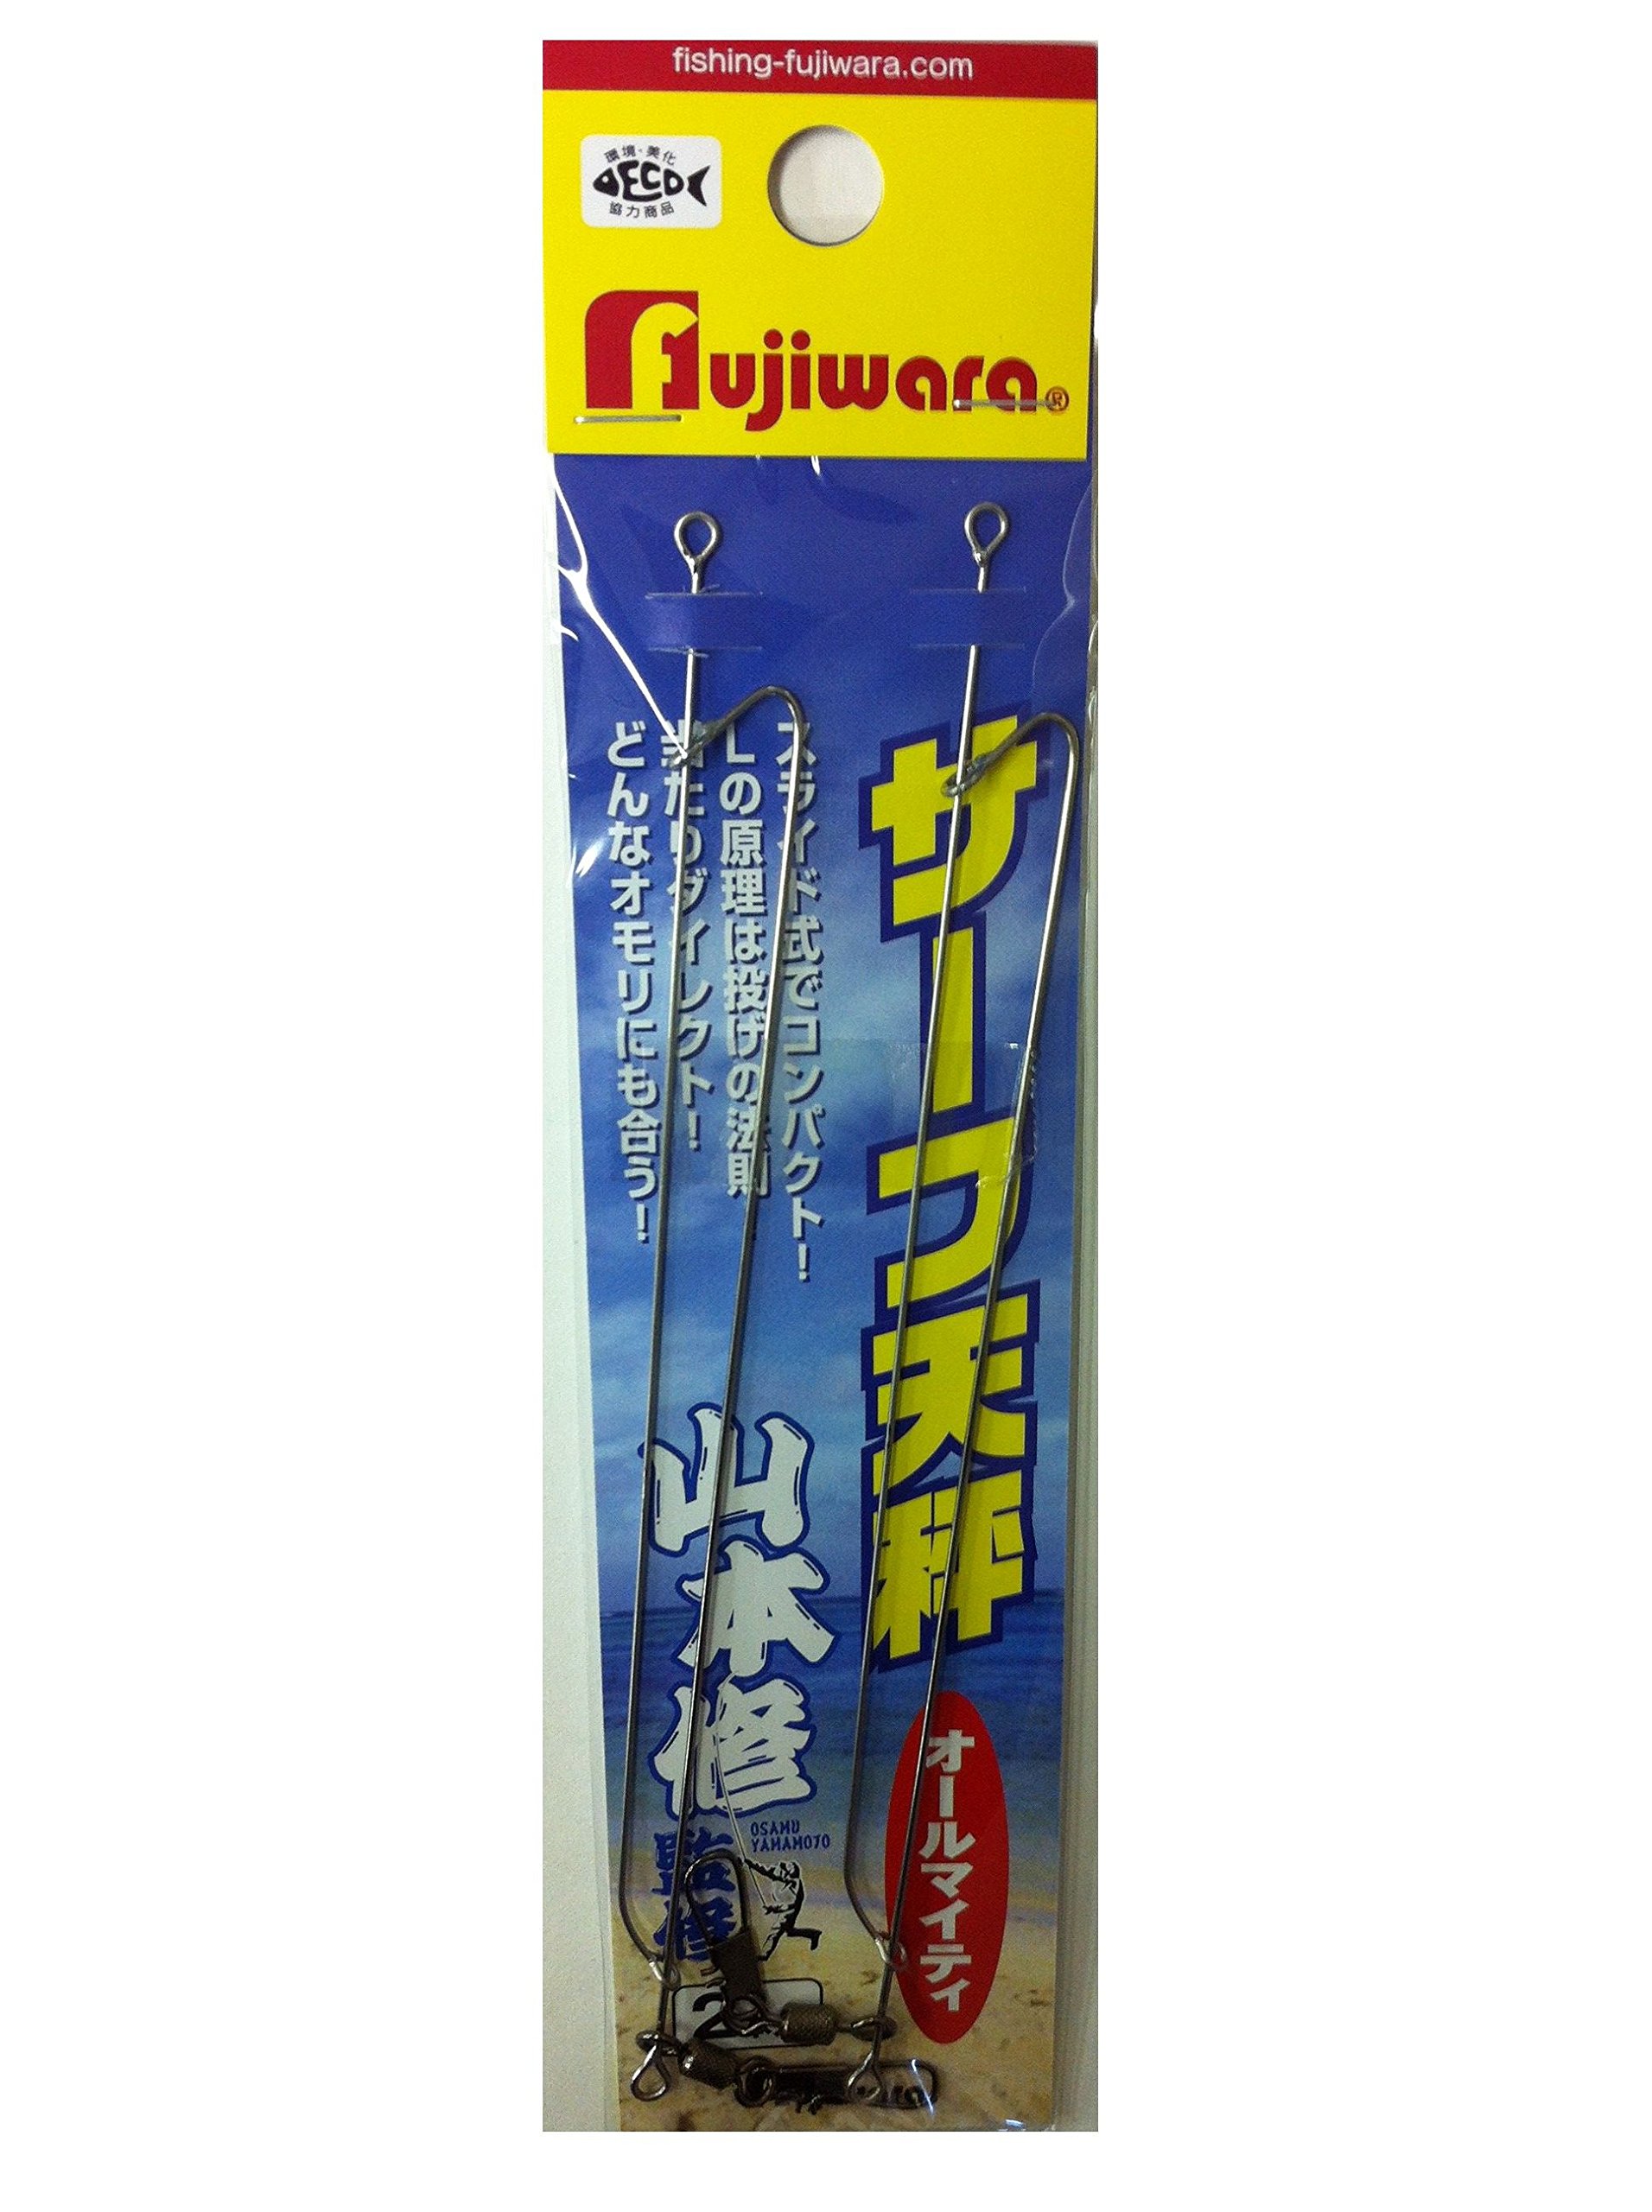  Fuji wala(FUJIWARA) Surf weighing scale almighty for 